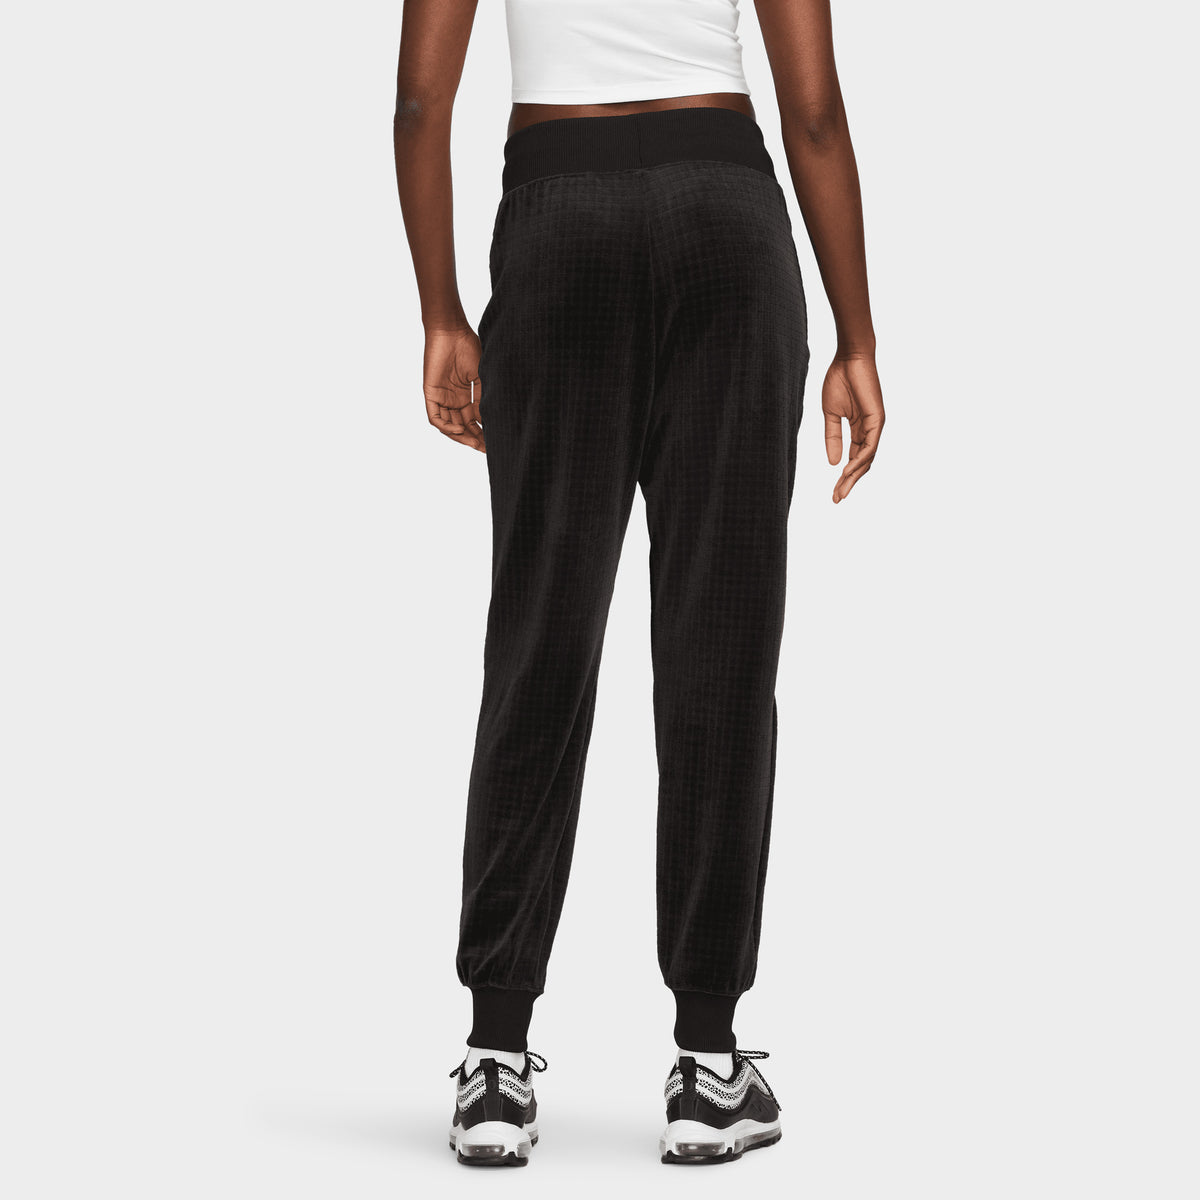 NIKE AIR VELOUR PANT, Black Women's Athletic Pant